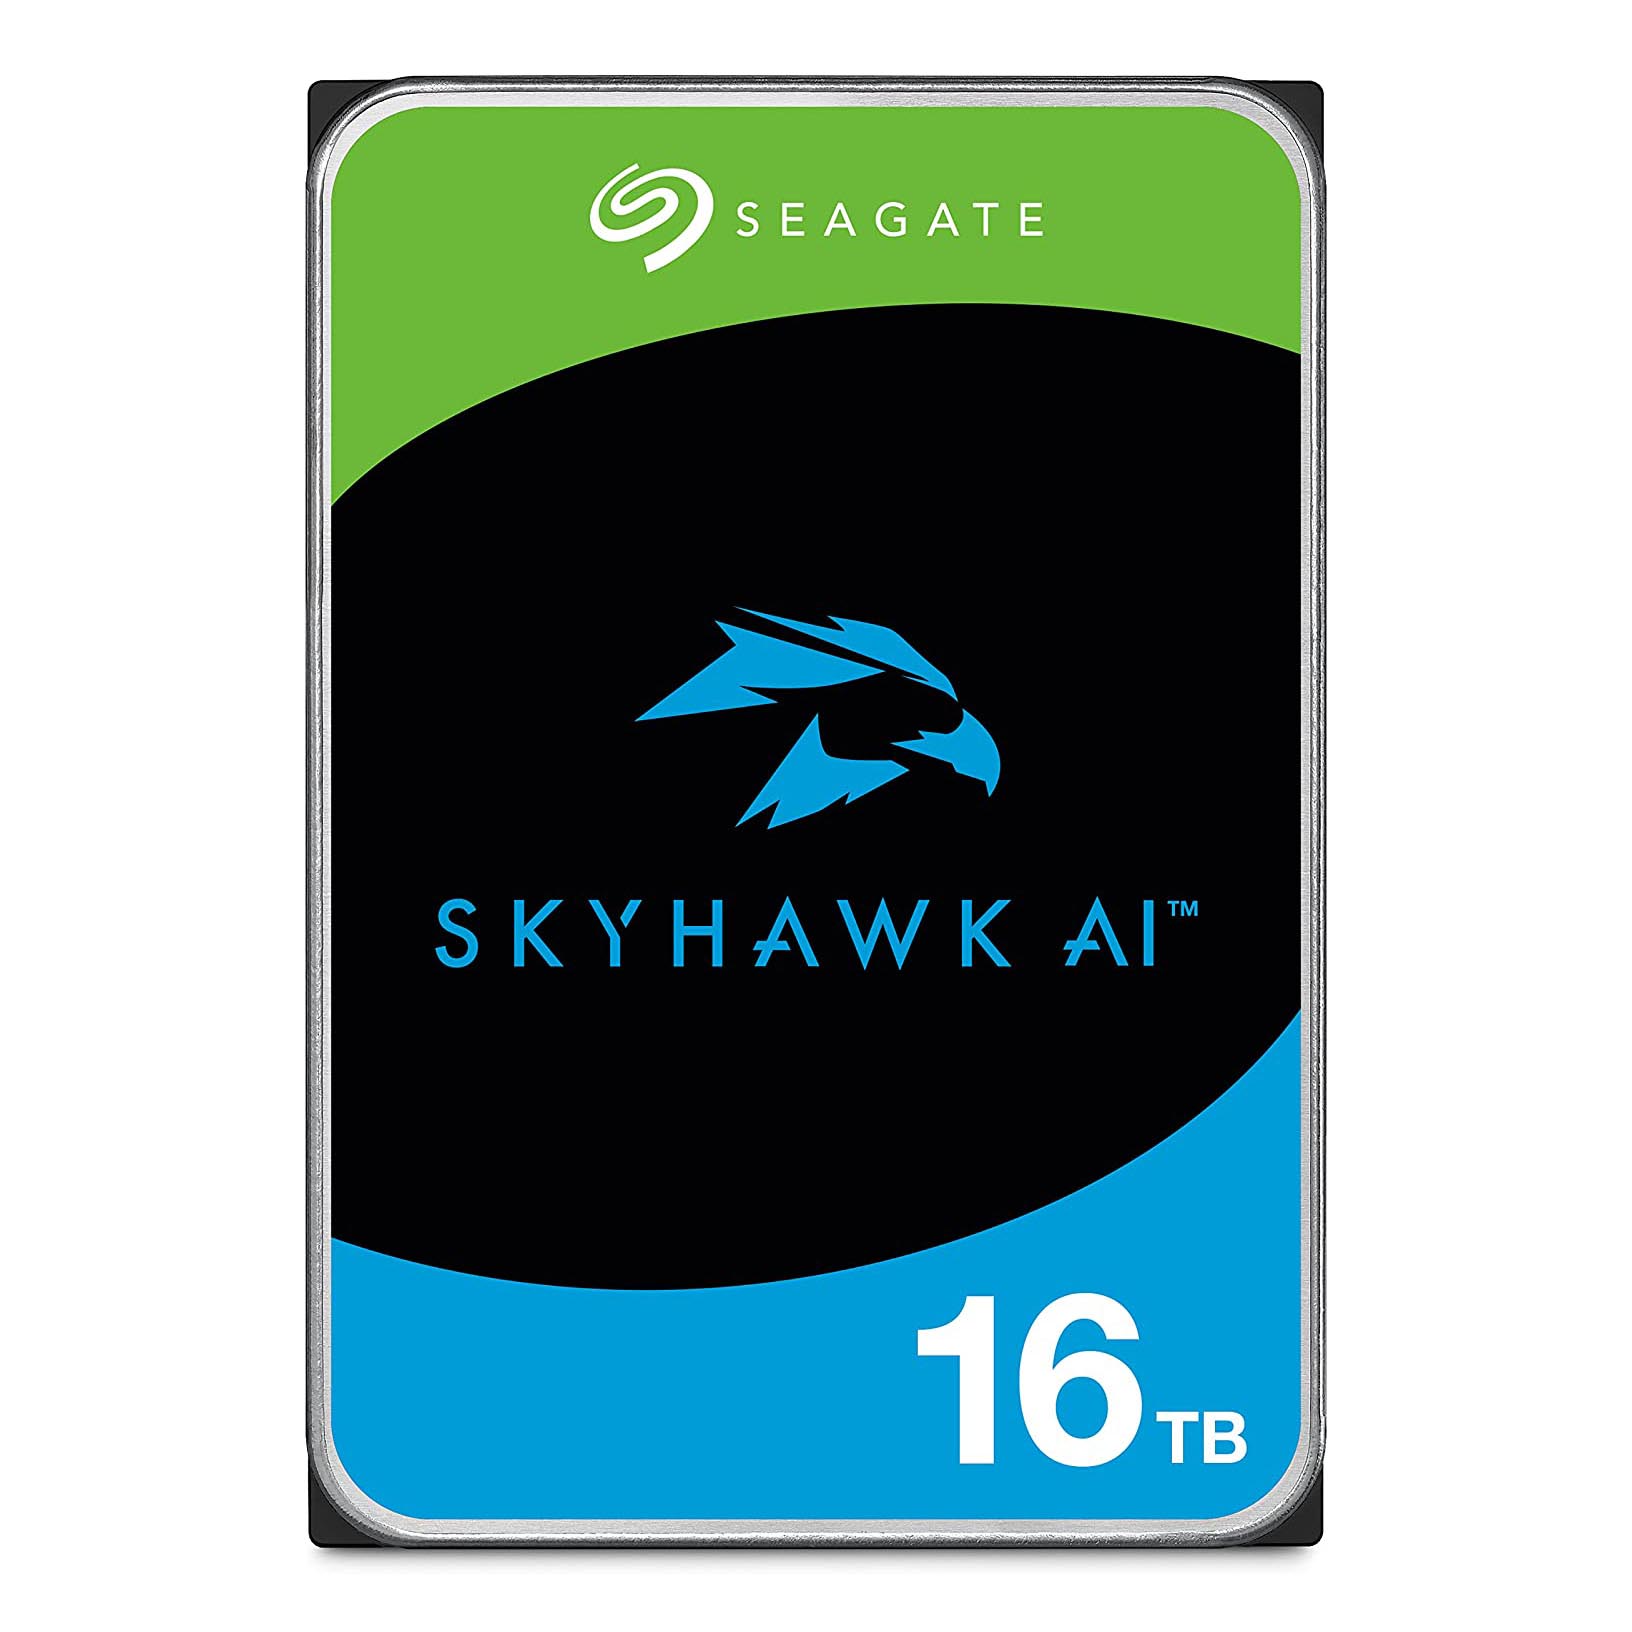 Внутренний жесткий диск Seagate SkyHawk AI, 3.5, 16 ТБ [ST16000VE002] внутренний жесткий диск seagate skyhawk surveillance st20000ve002 20 тб